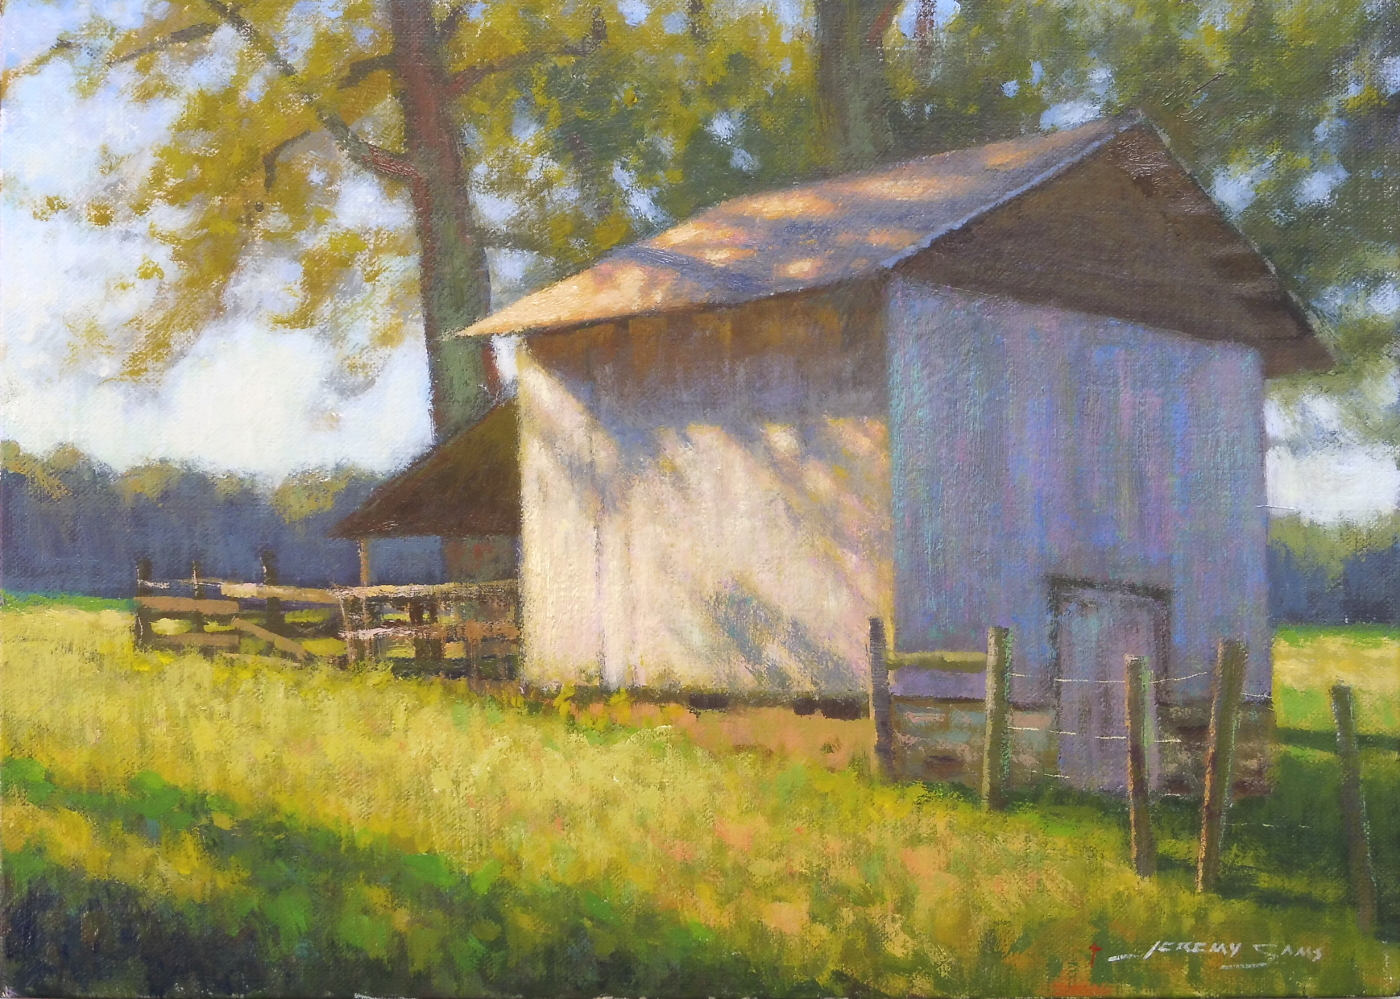 plein air painting of tobacco barn wilkes county by North Carolina artist Jeremy Sams